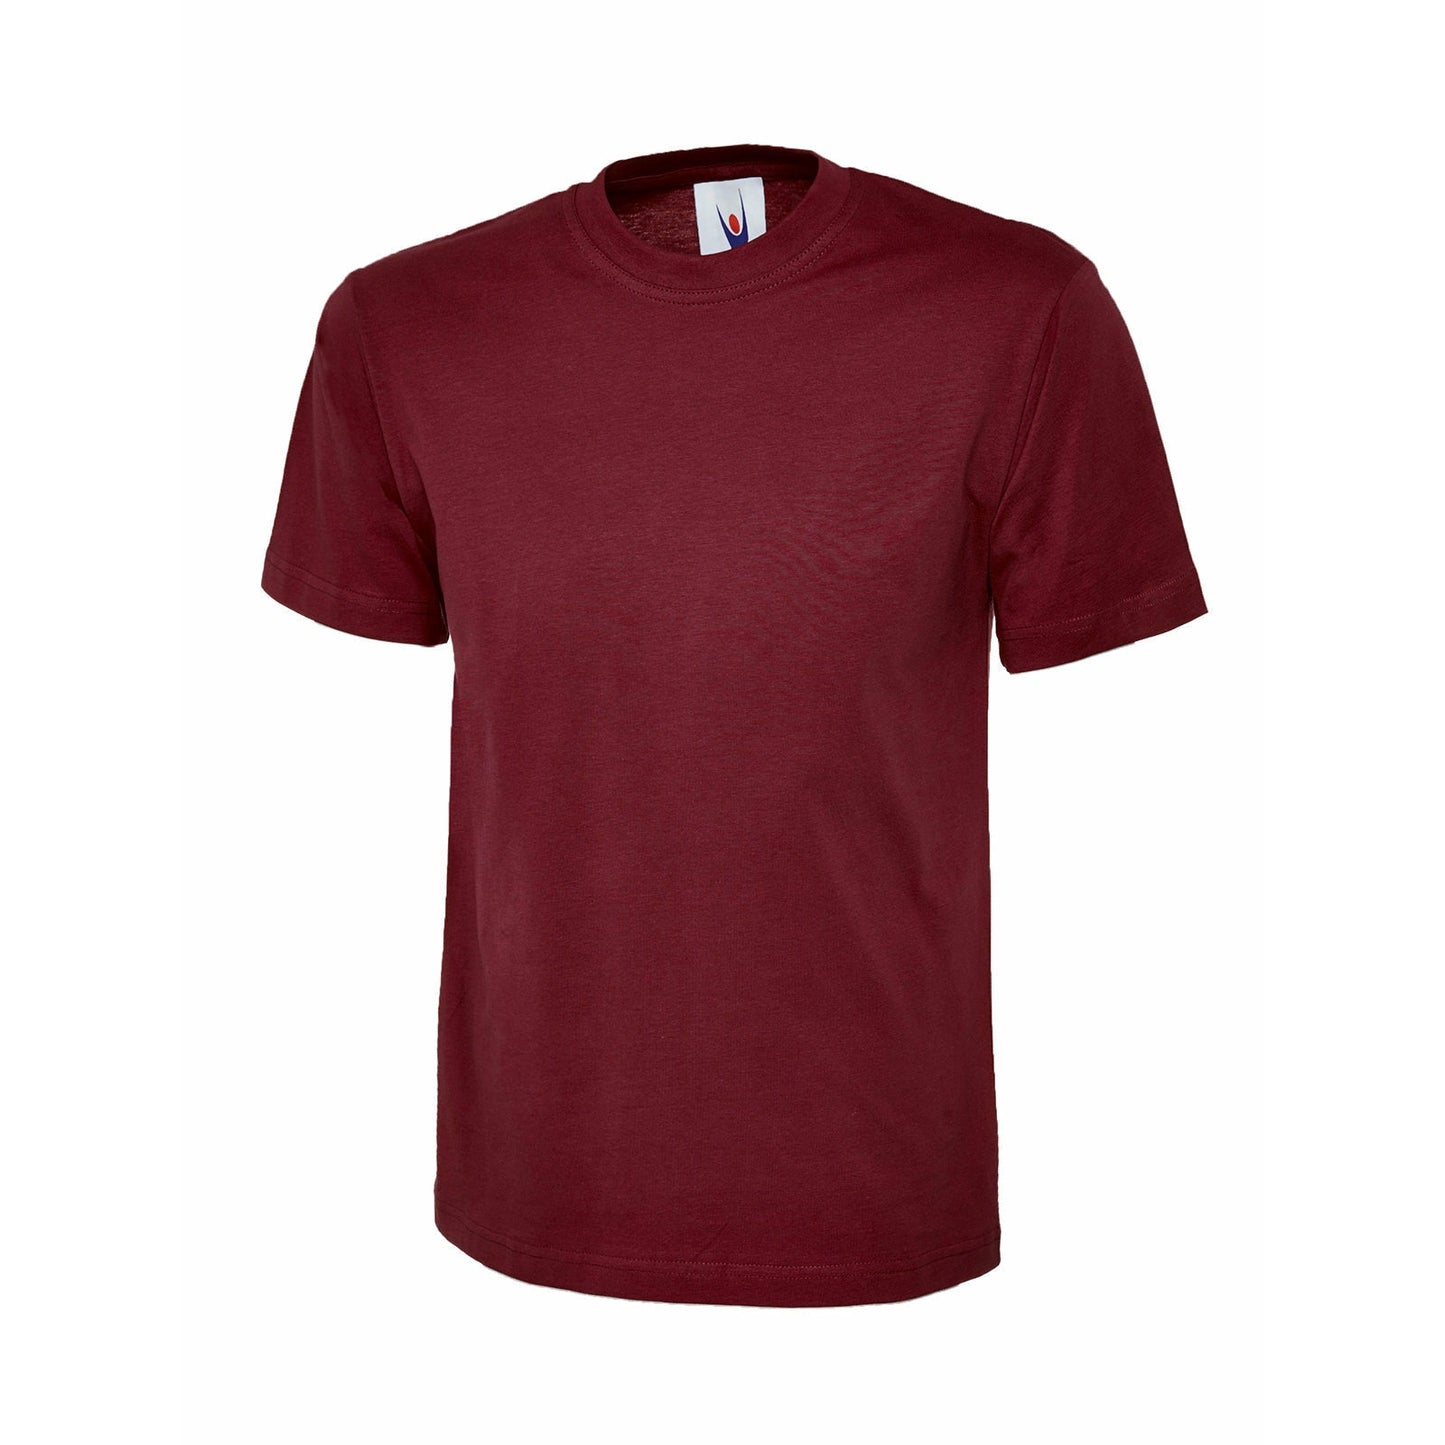 Personalised Custom T-Shirt - Maroon